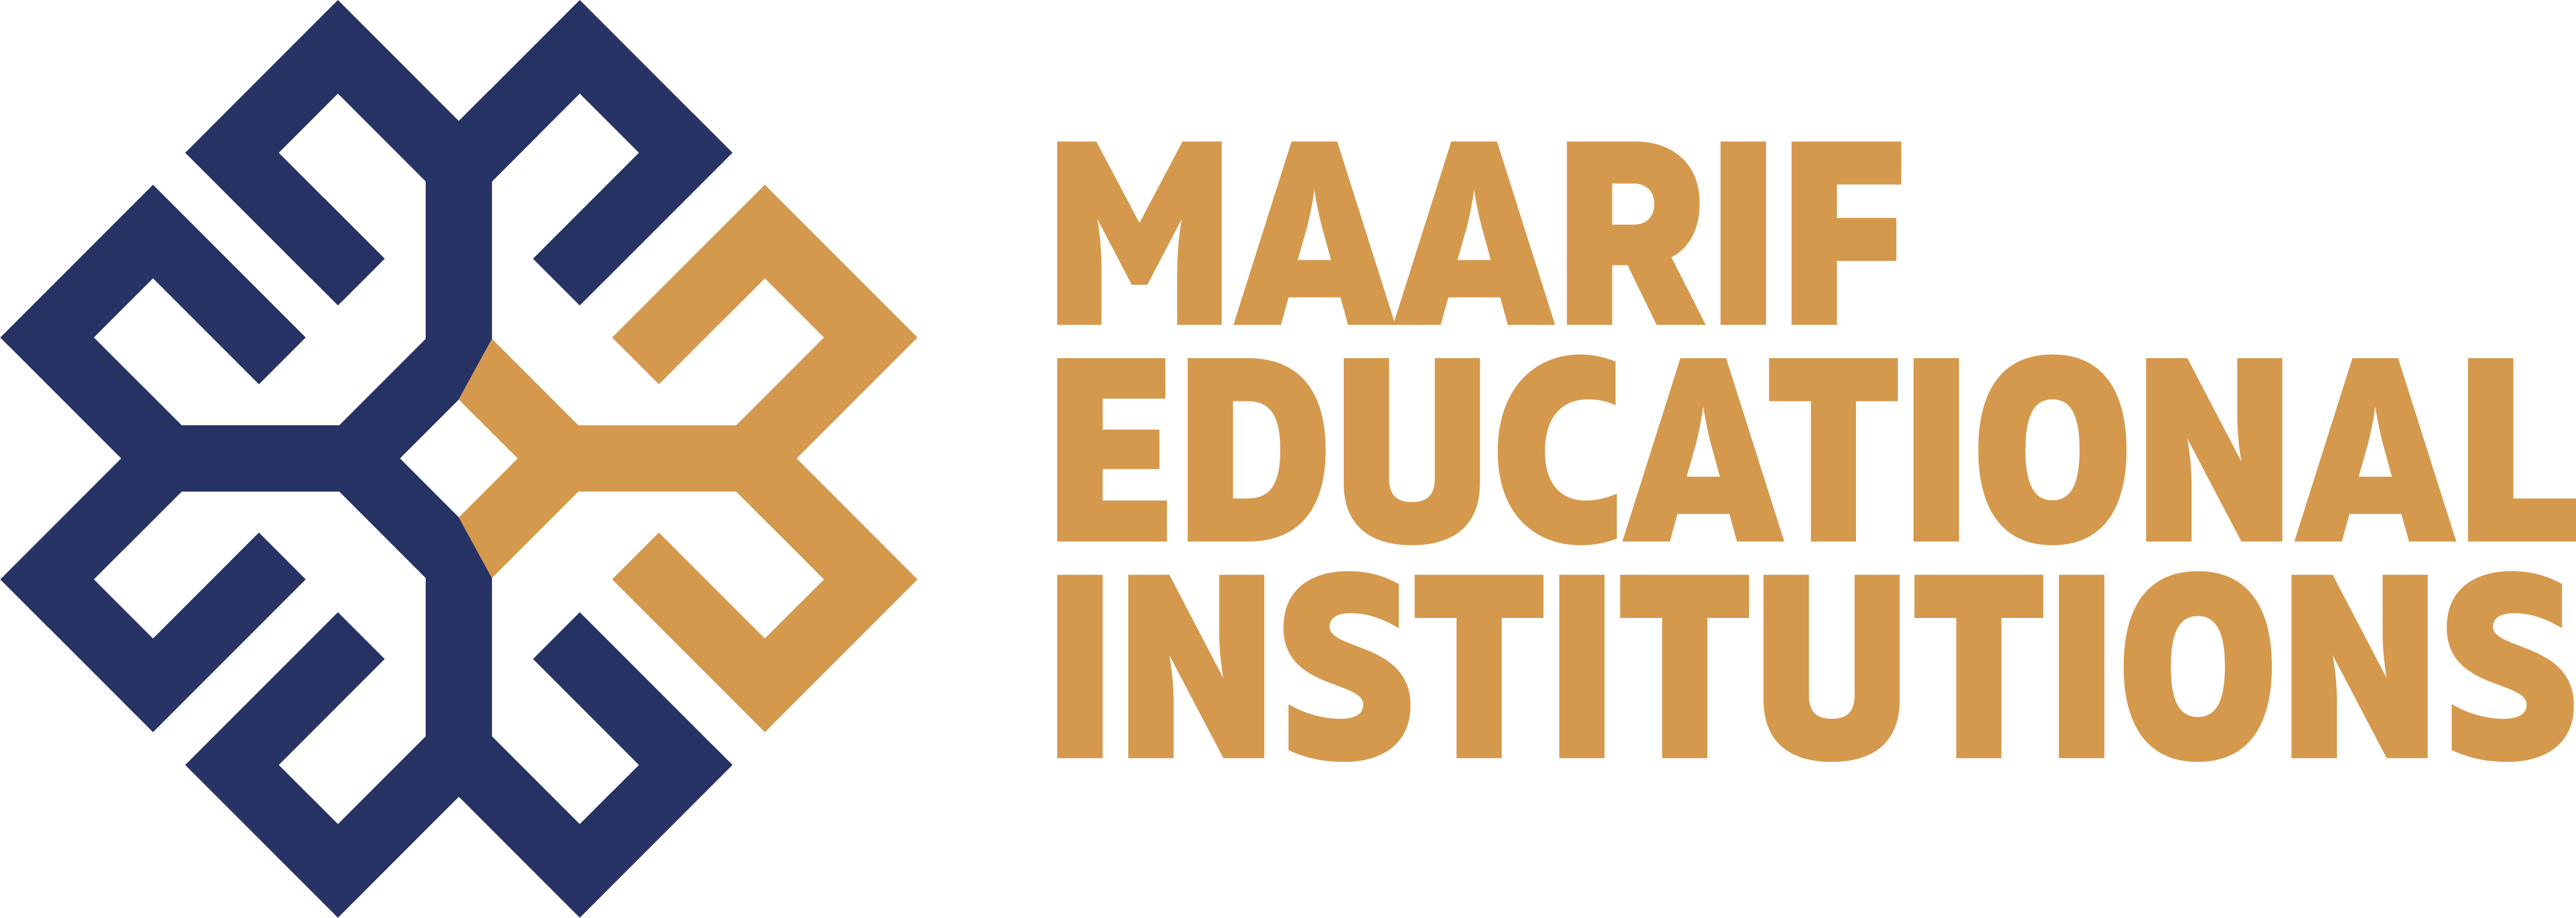 Maarif Educational Institutions